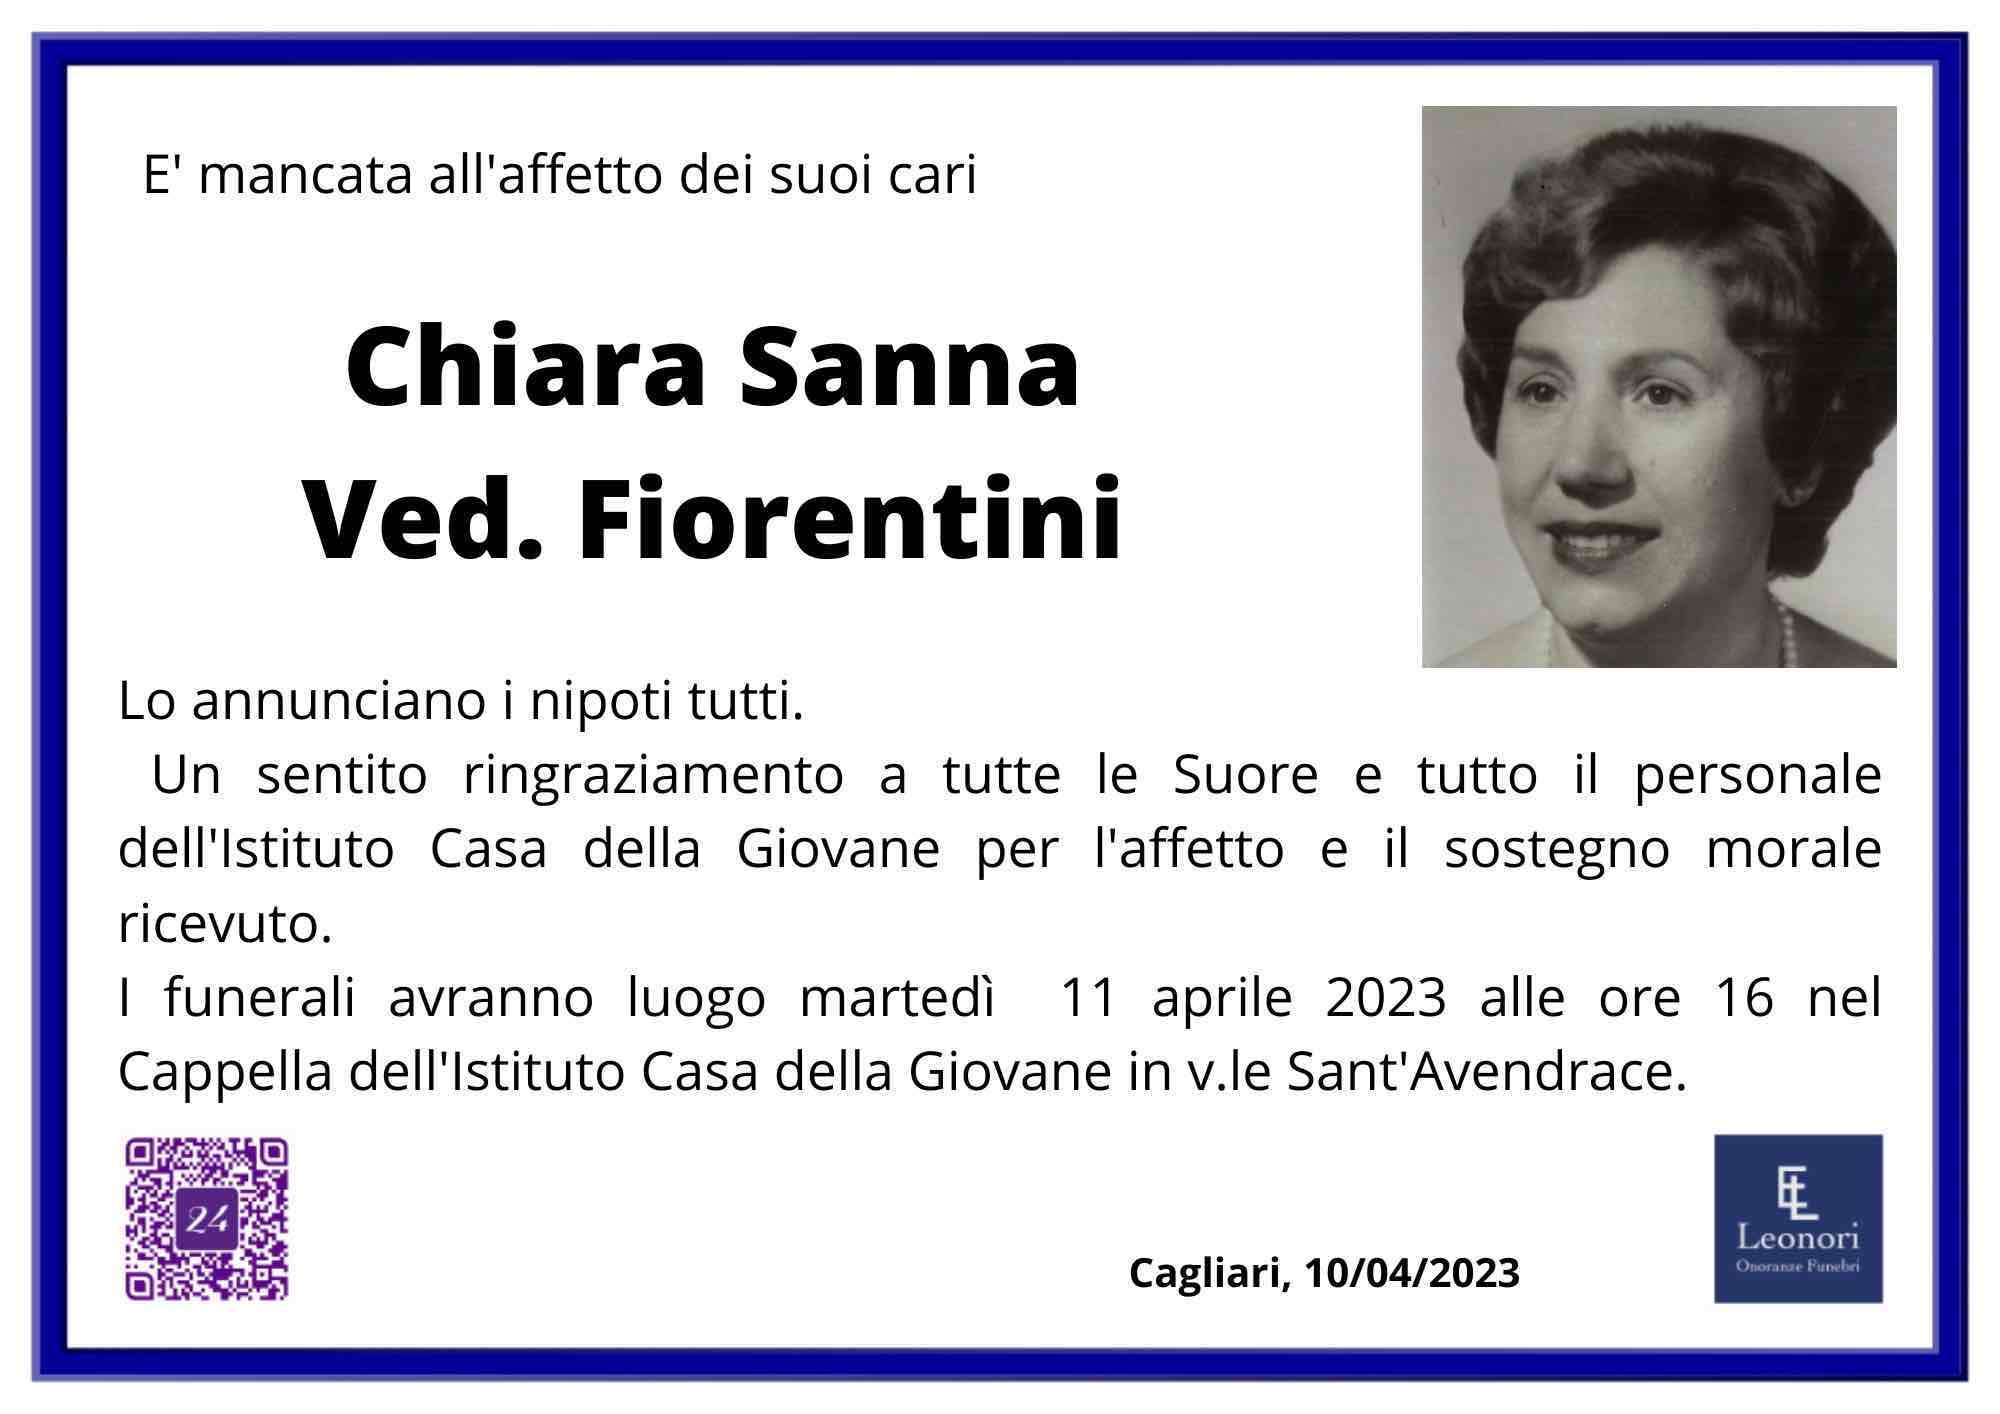 Chiara Sanna